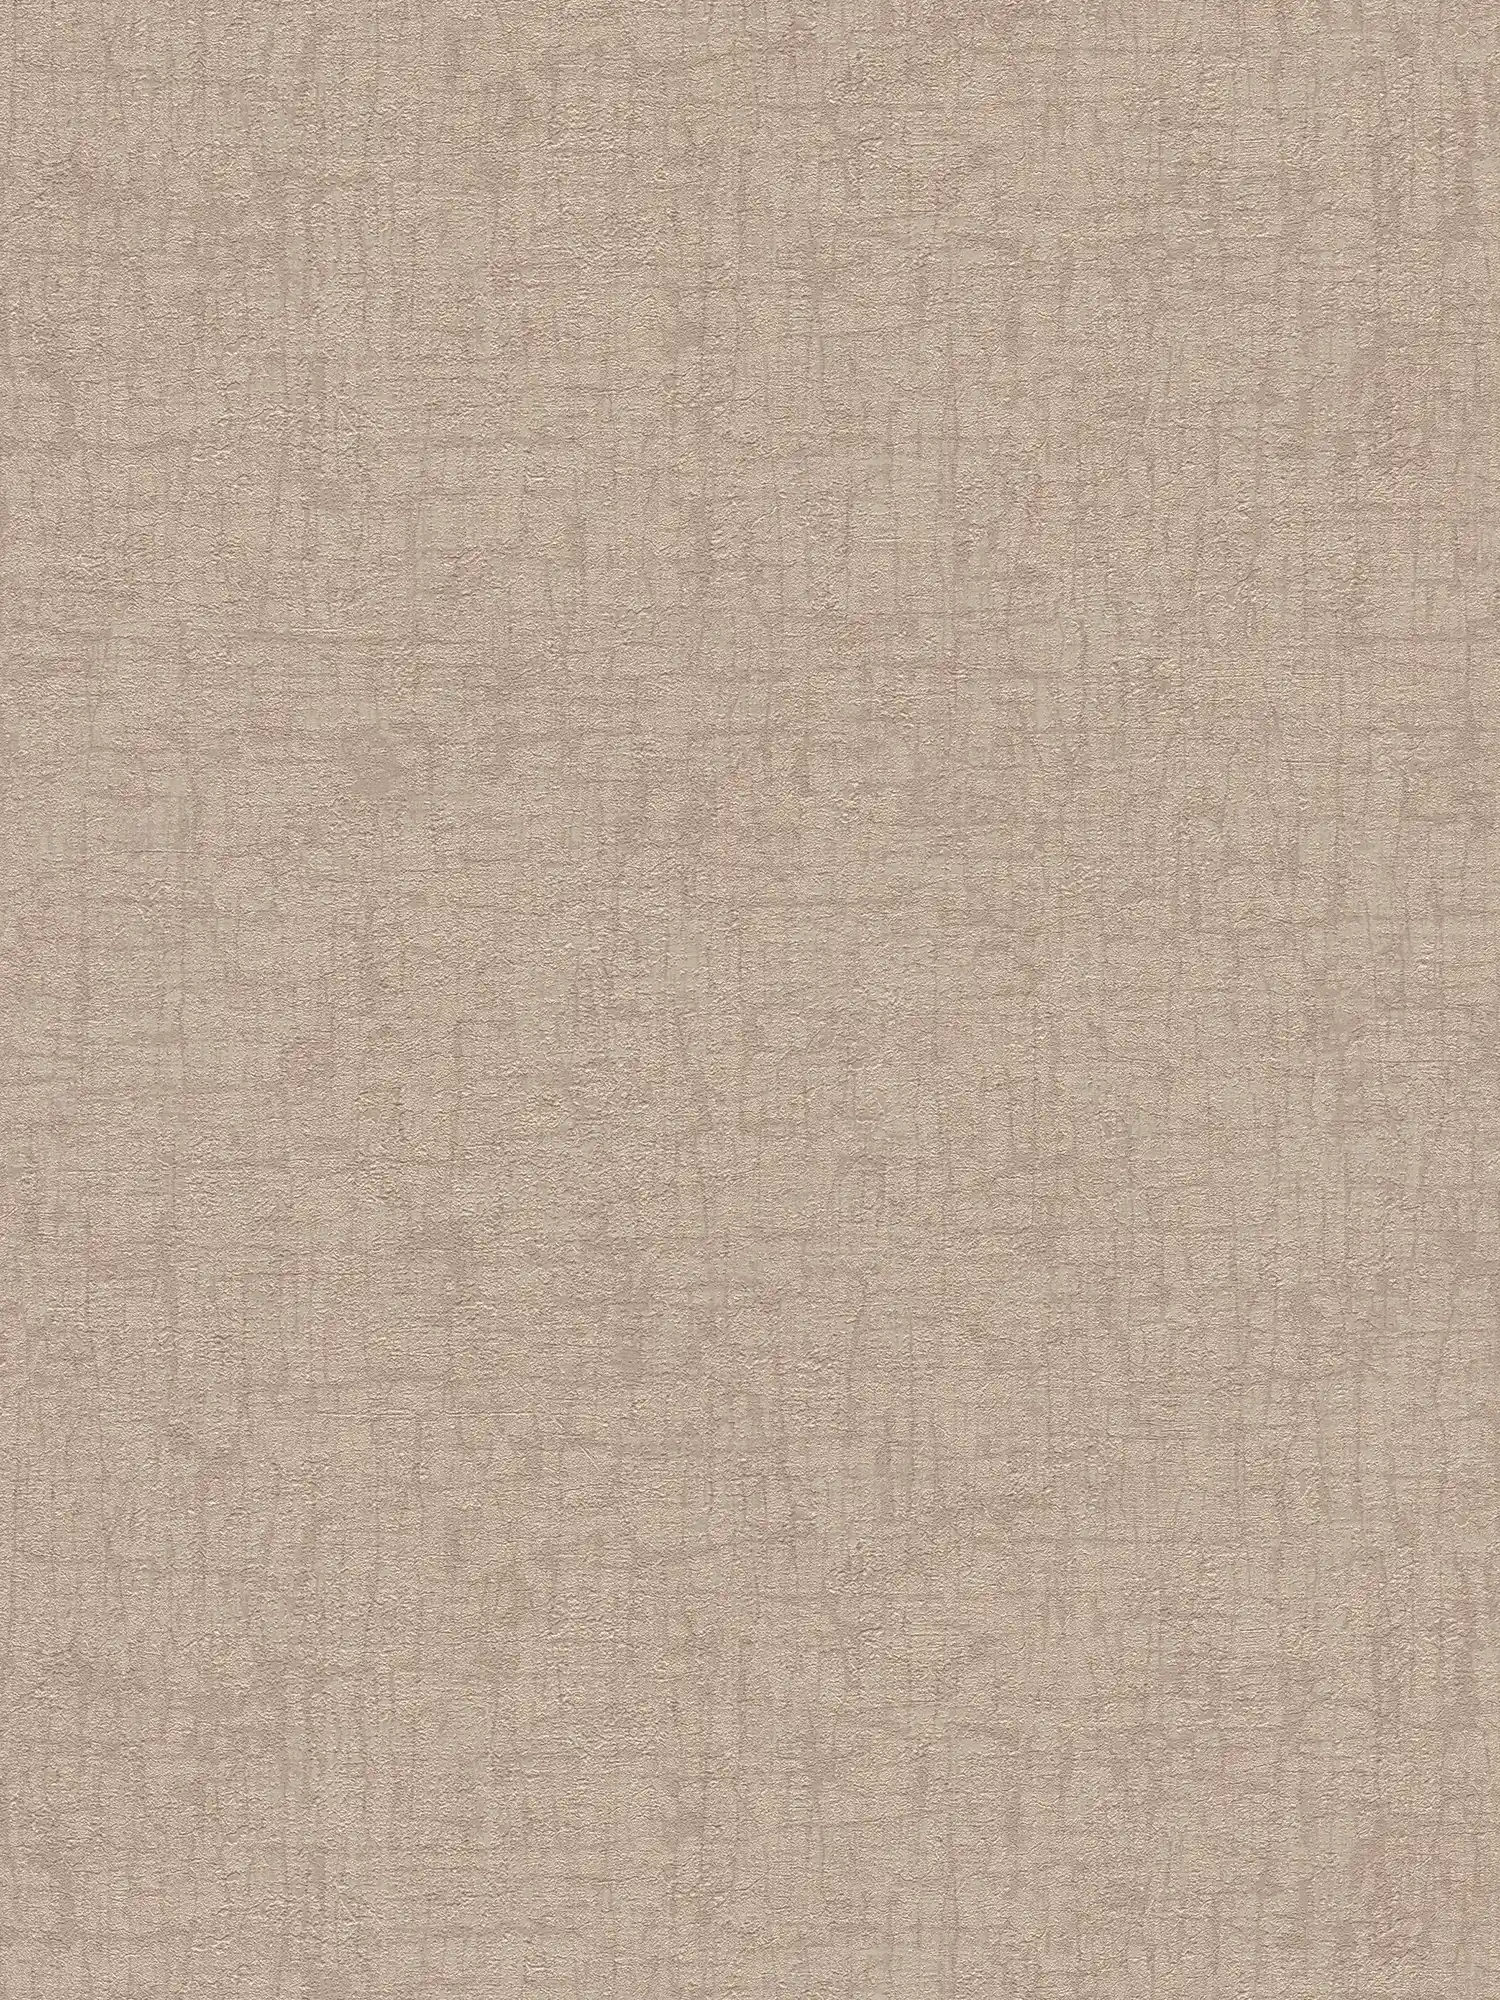 Textured non-woven wallpaper with a slight sheen - brown, beige
